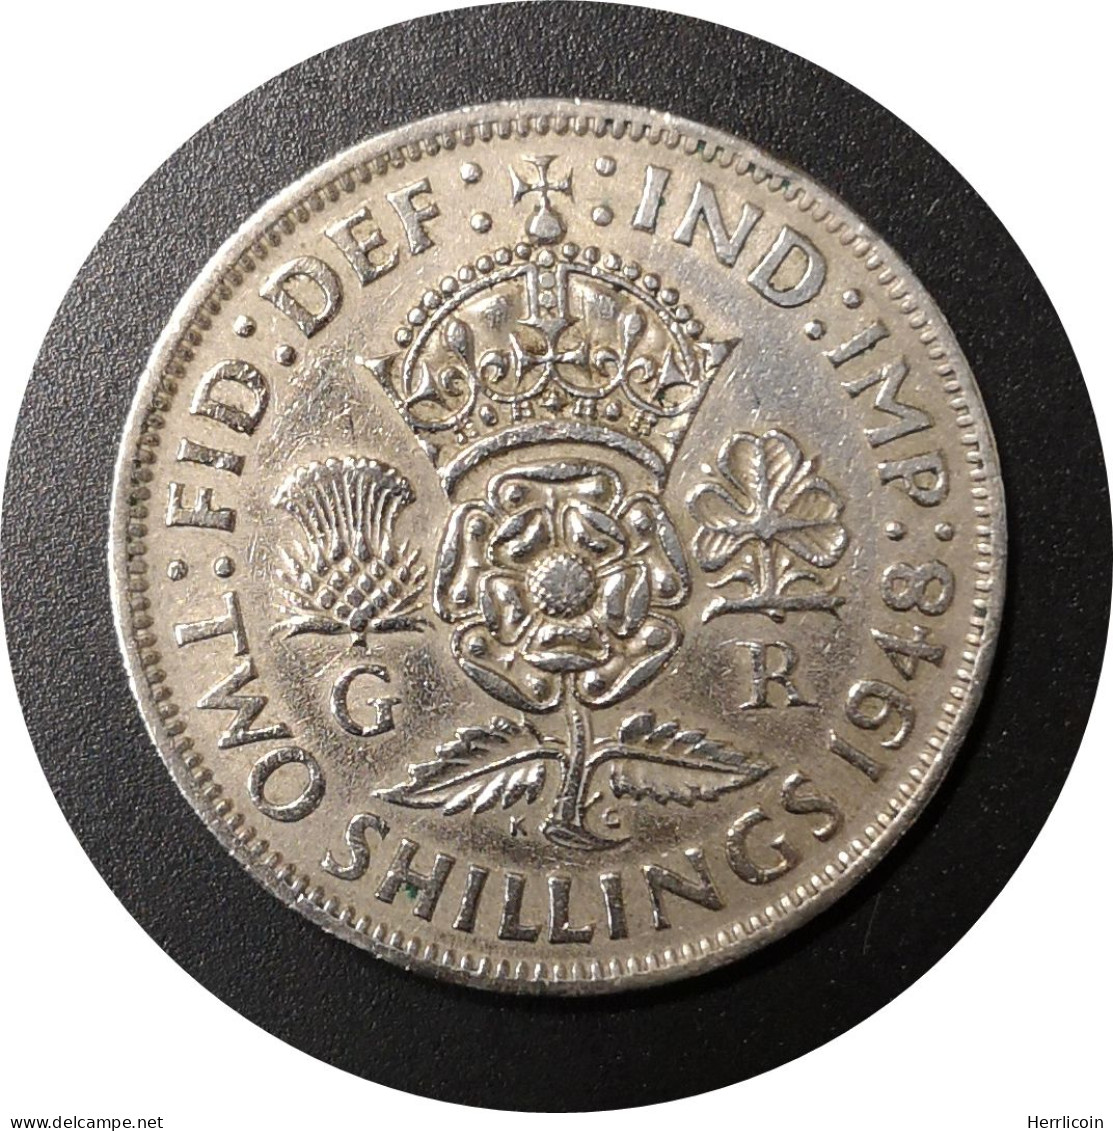 Monnaie Royaume-Uni - 1948 - 2 Shillings George VI - J. 1 Florin / 2 Shillings